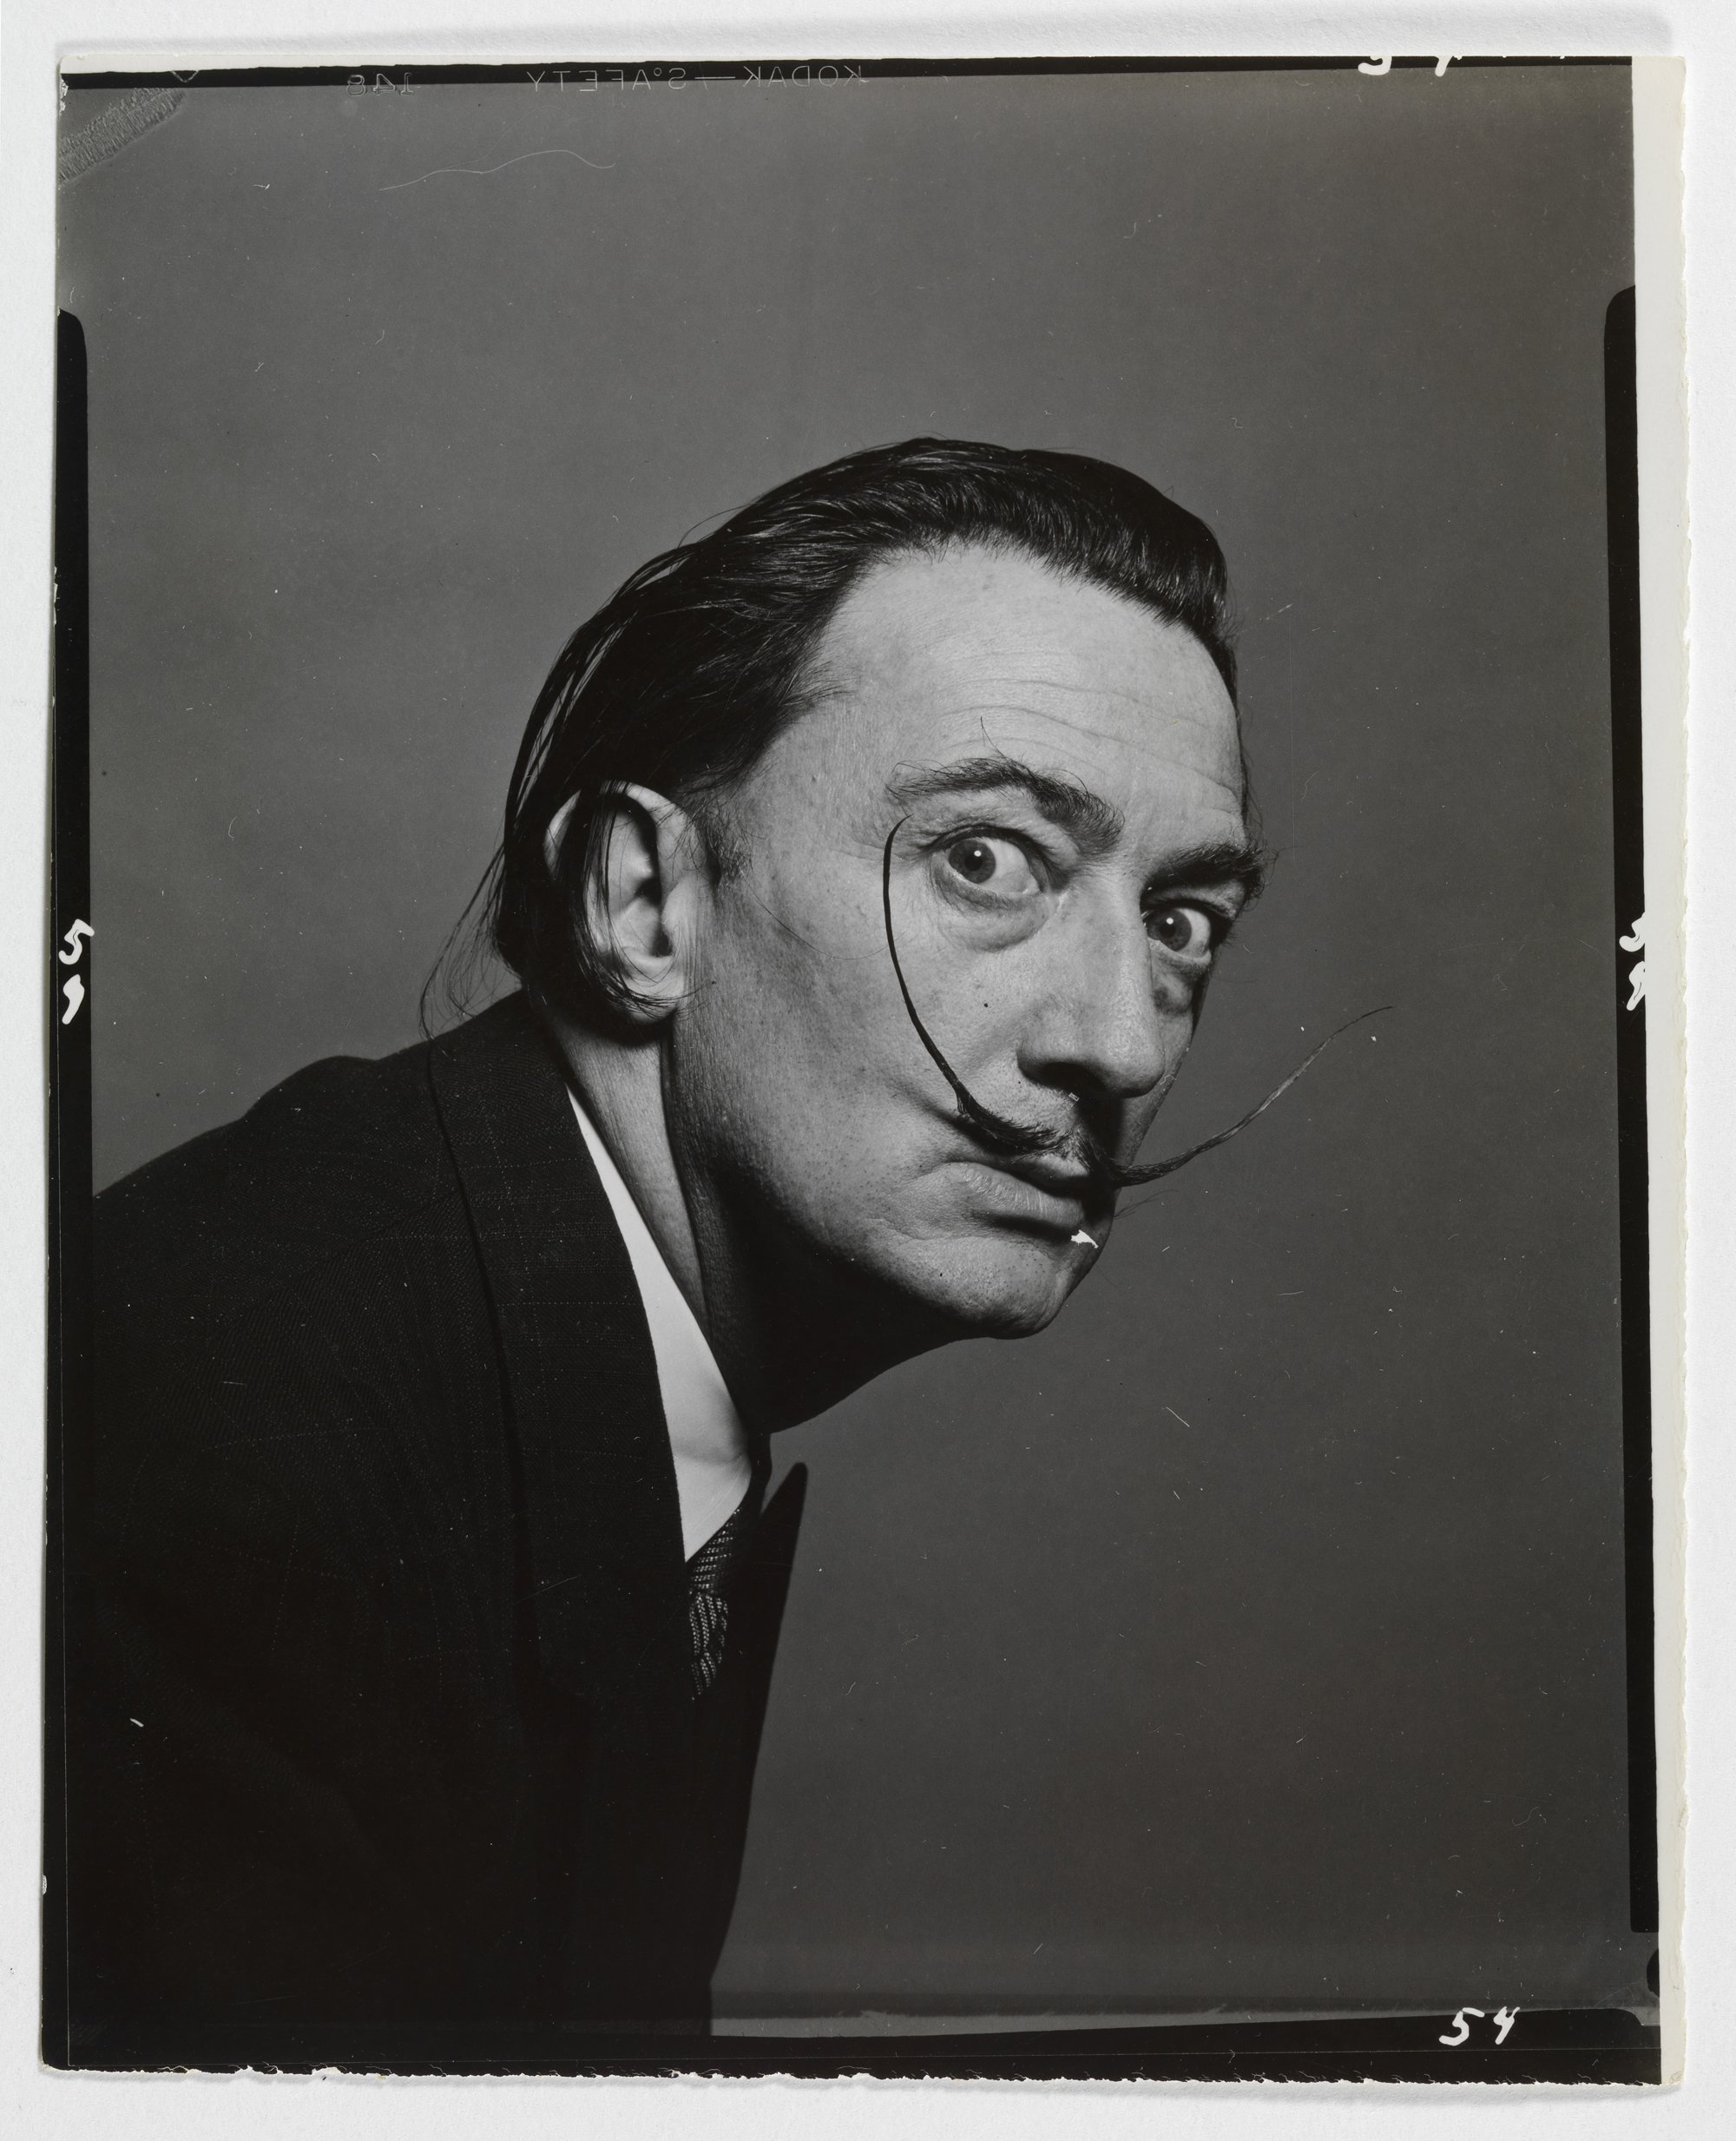 Salvador Dalí: ¿paternidad o impotencia?